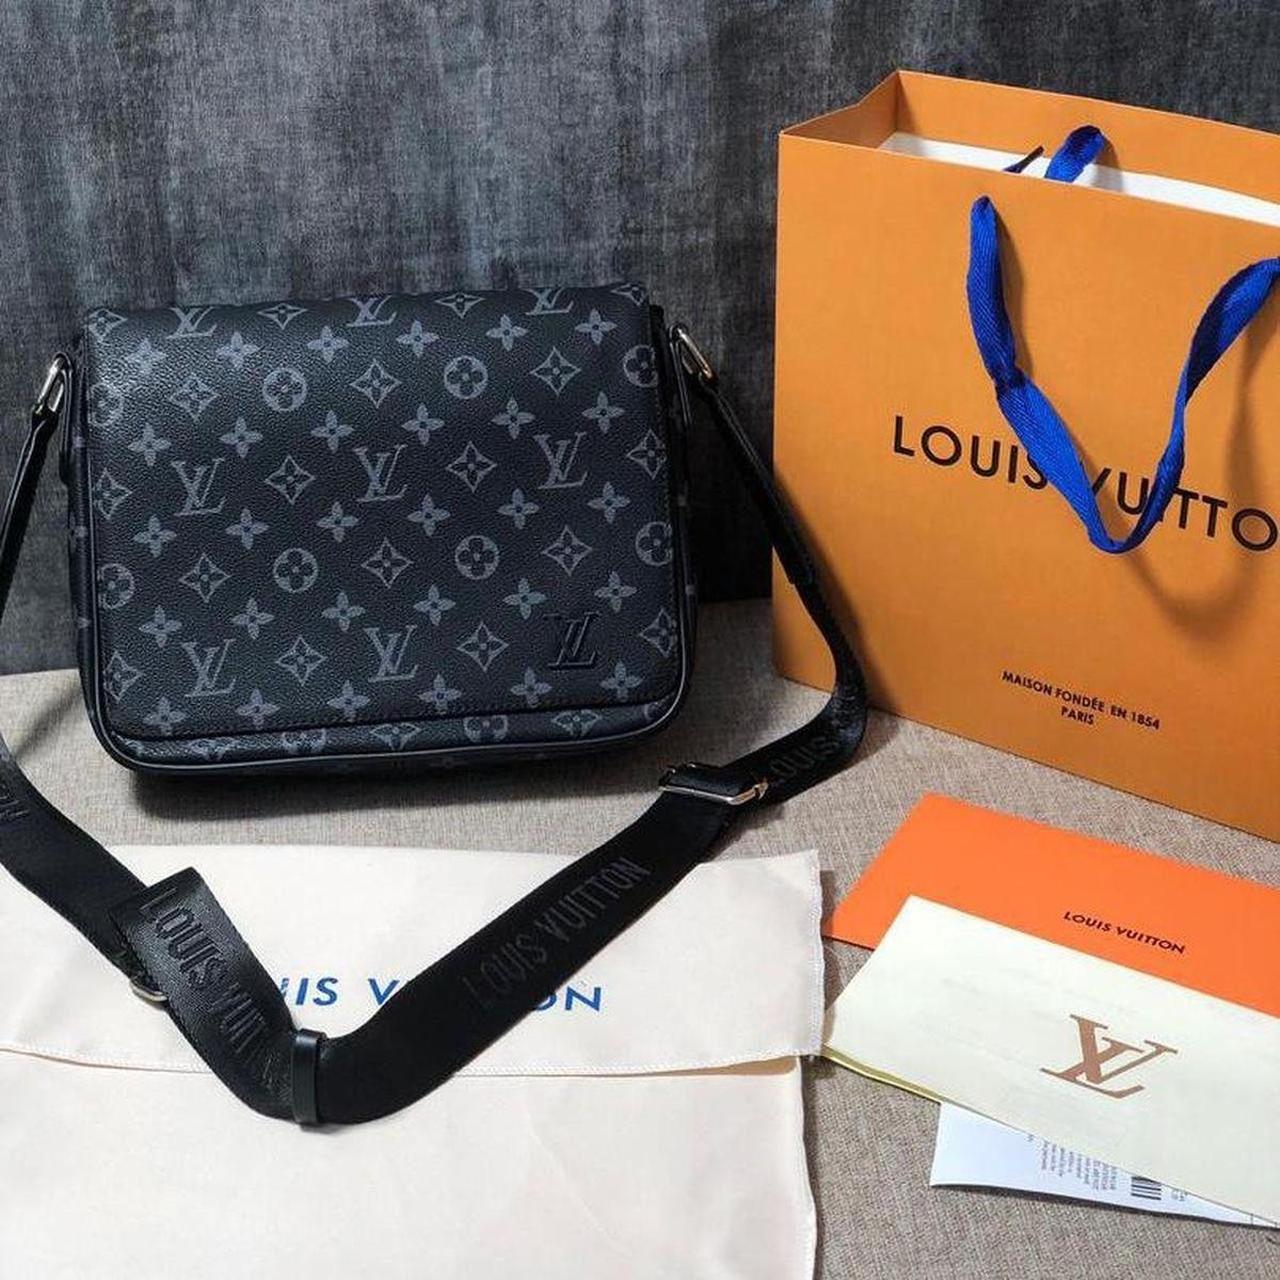 LV bag from 2017 code on it is sp3117 #louisvuitton - Depop